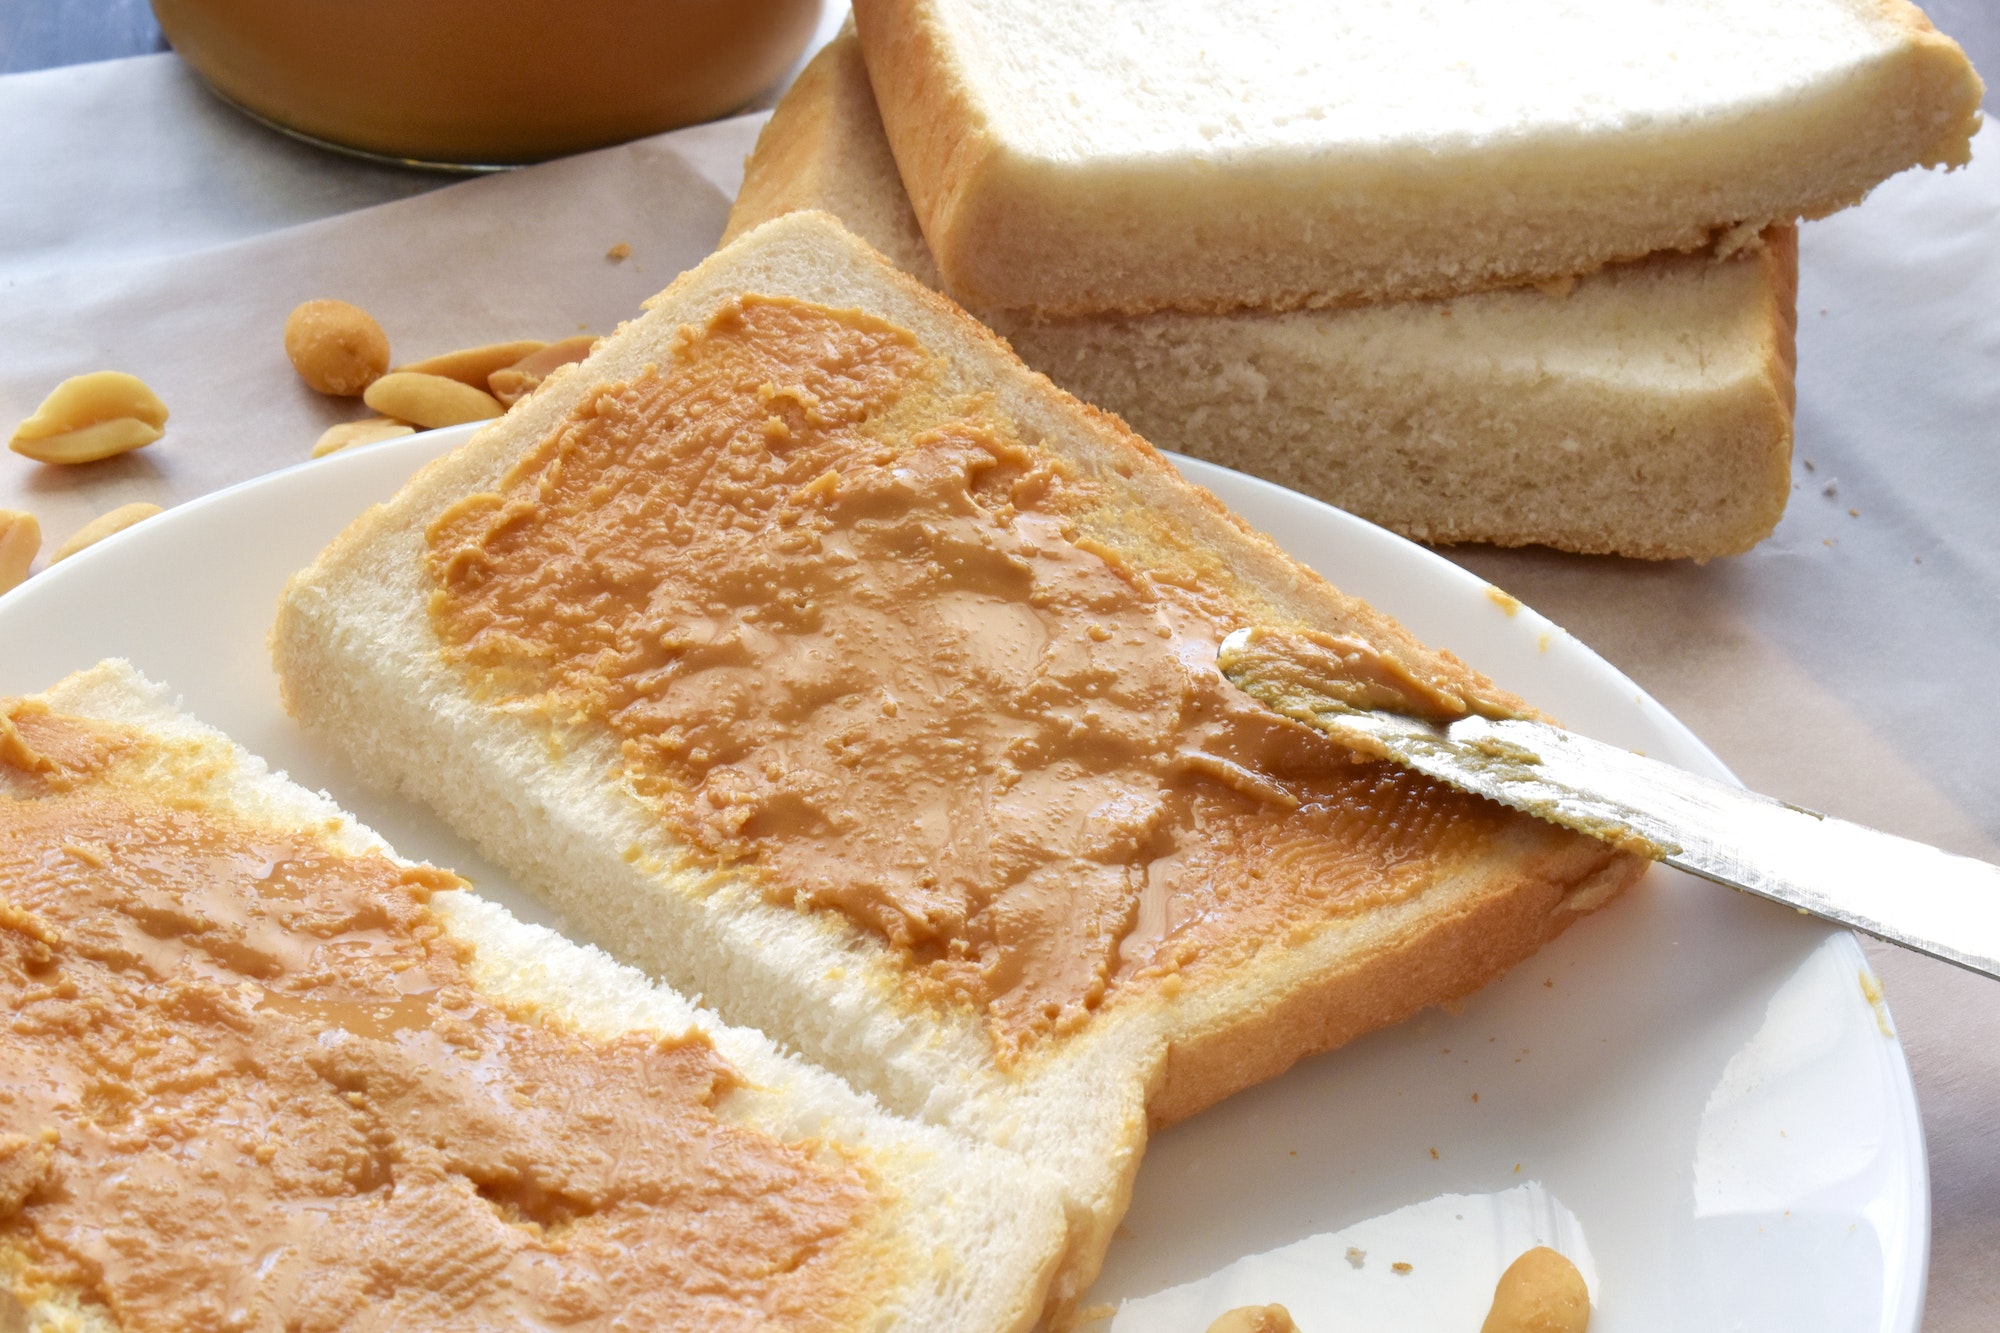 Peanut butter sandwich on a white plate.